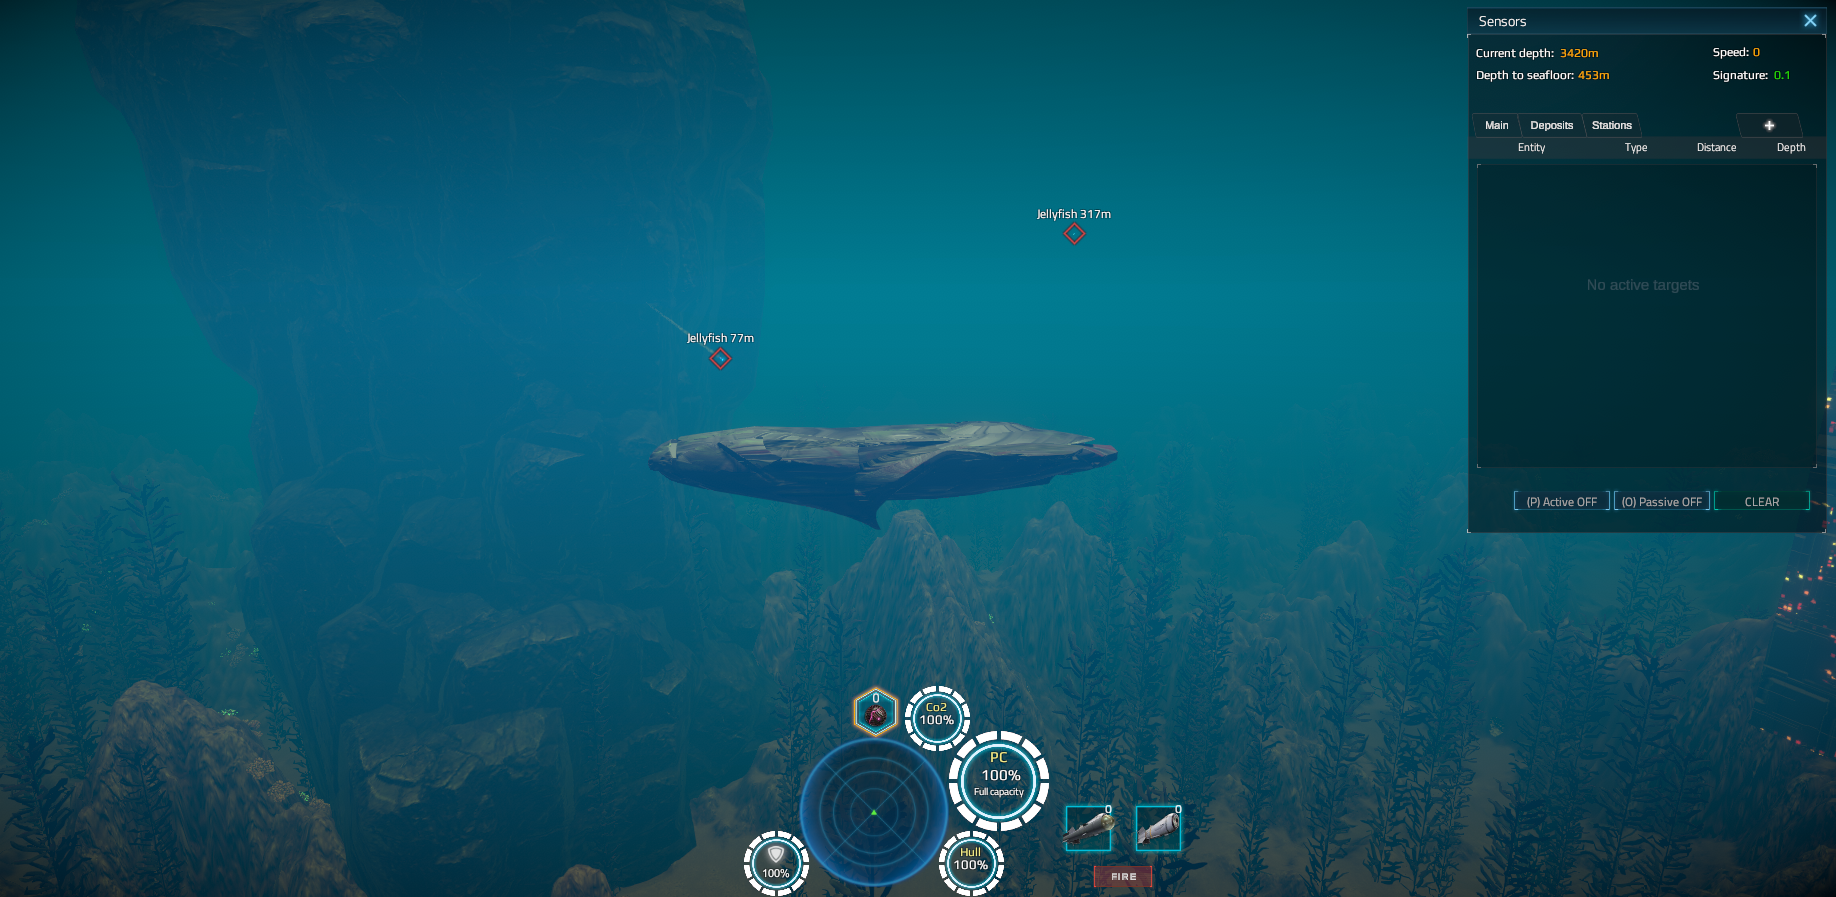 Ui for tracking incoming torpedos